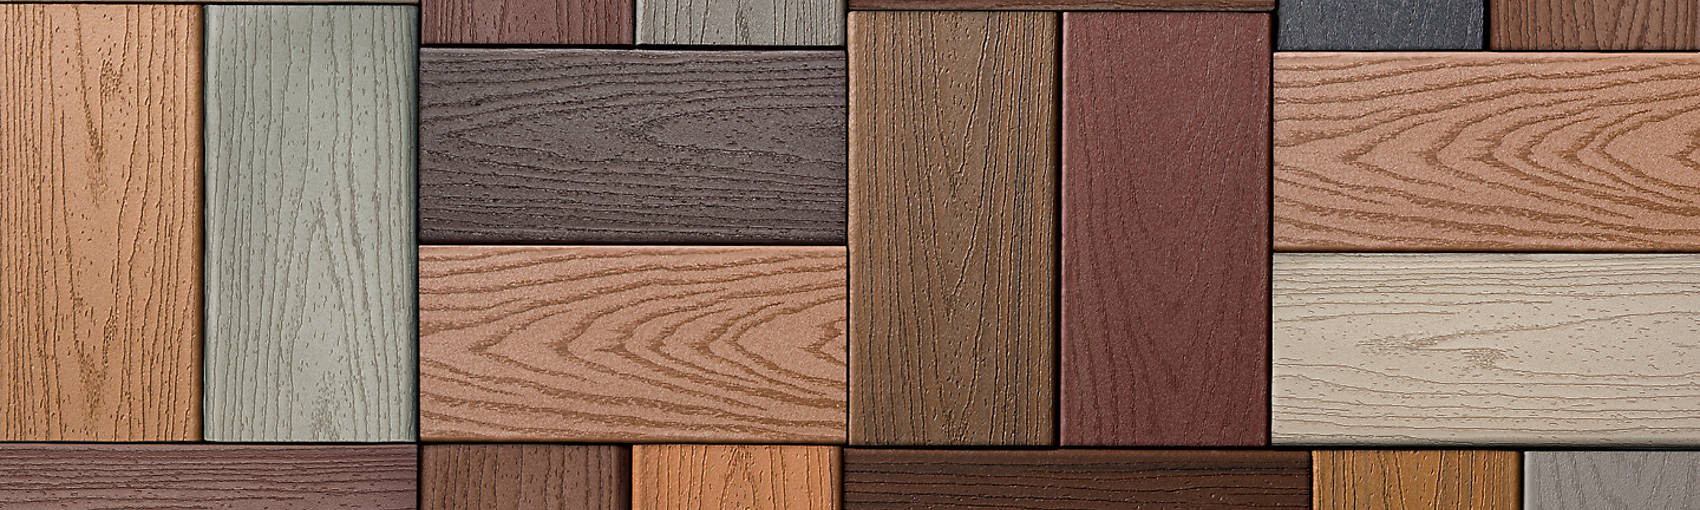 Northern Mills Hardwood Flooring Inc Of Composite Decking Composite Deck Materials Trex Inside Trex Color Selector Hero 2